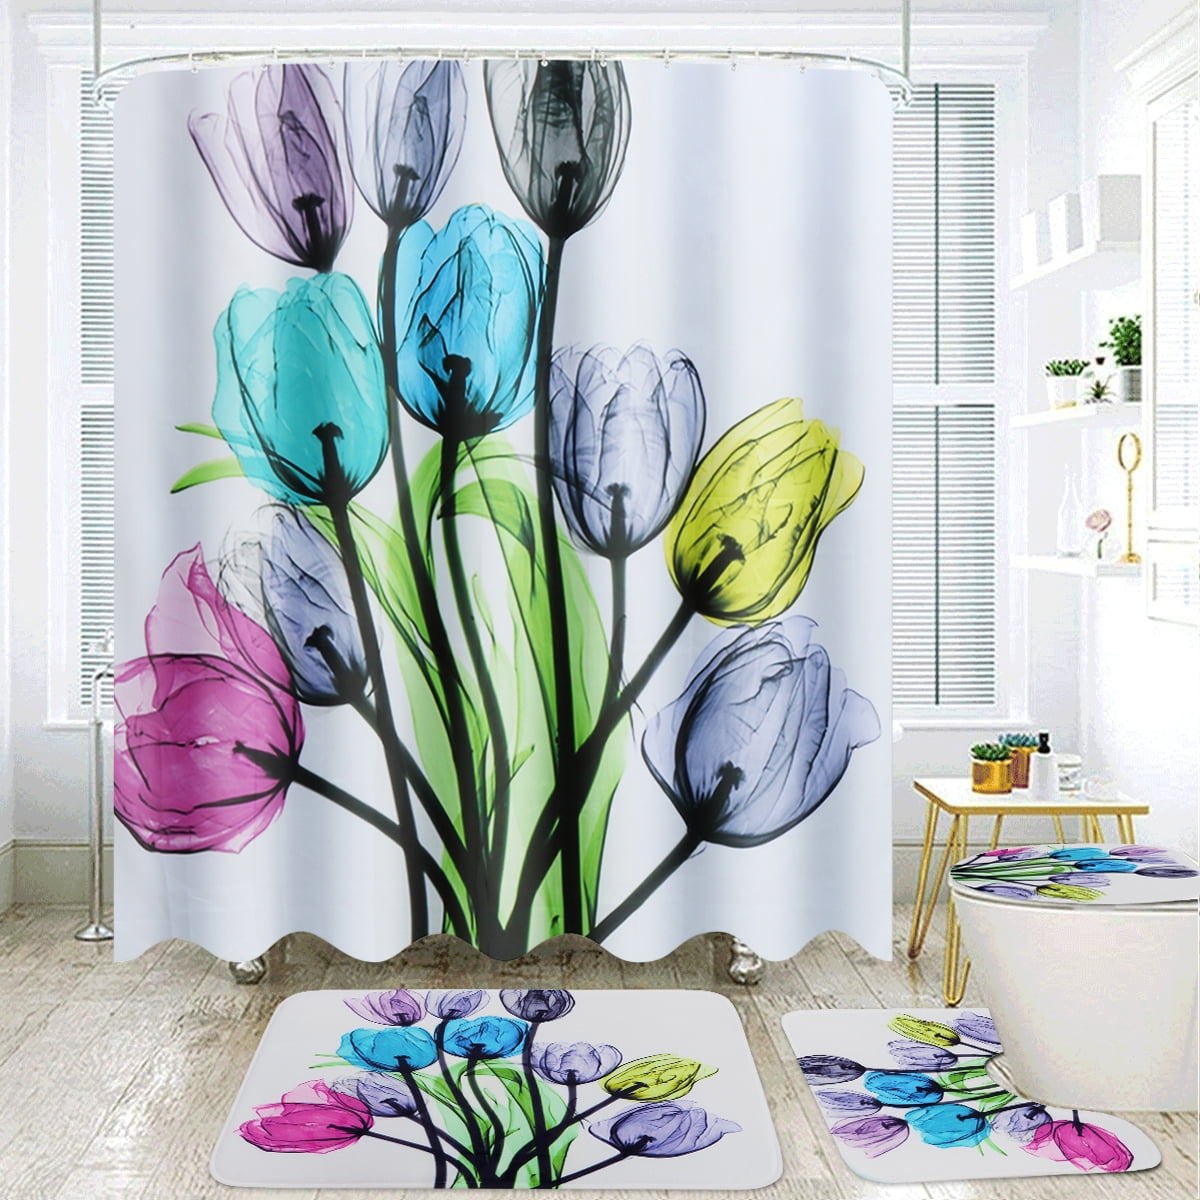 The Steppe Horse Theme Waterproof Fabric Home Decor Shower Curtain Bathroom Mat 